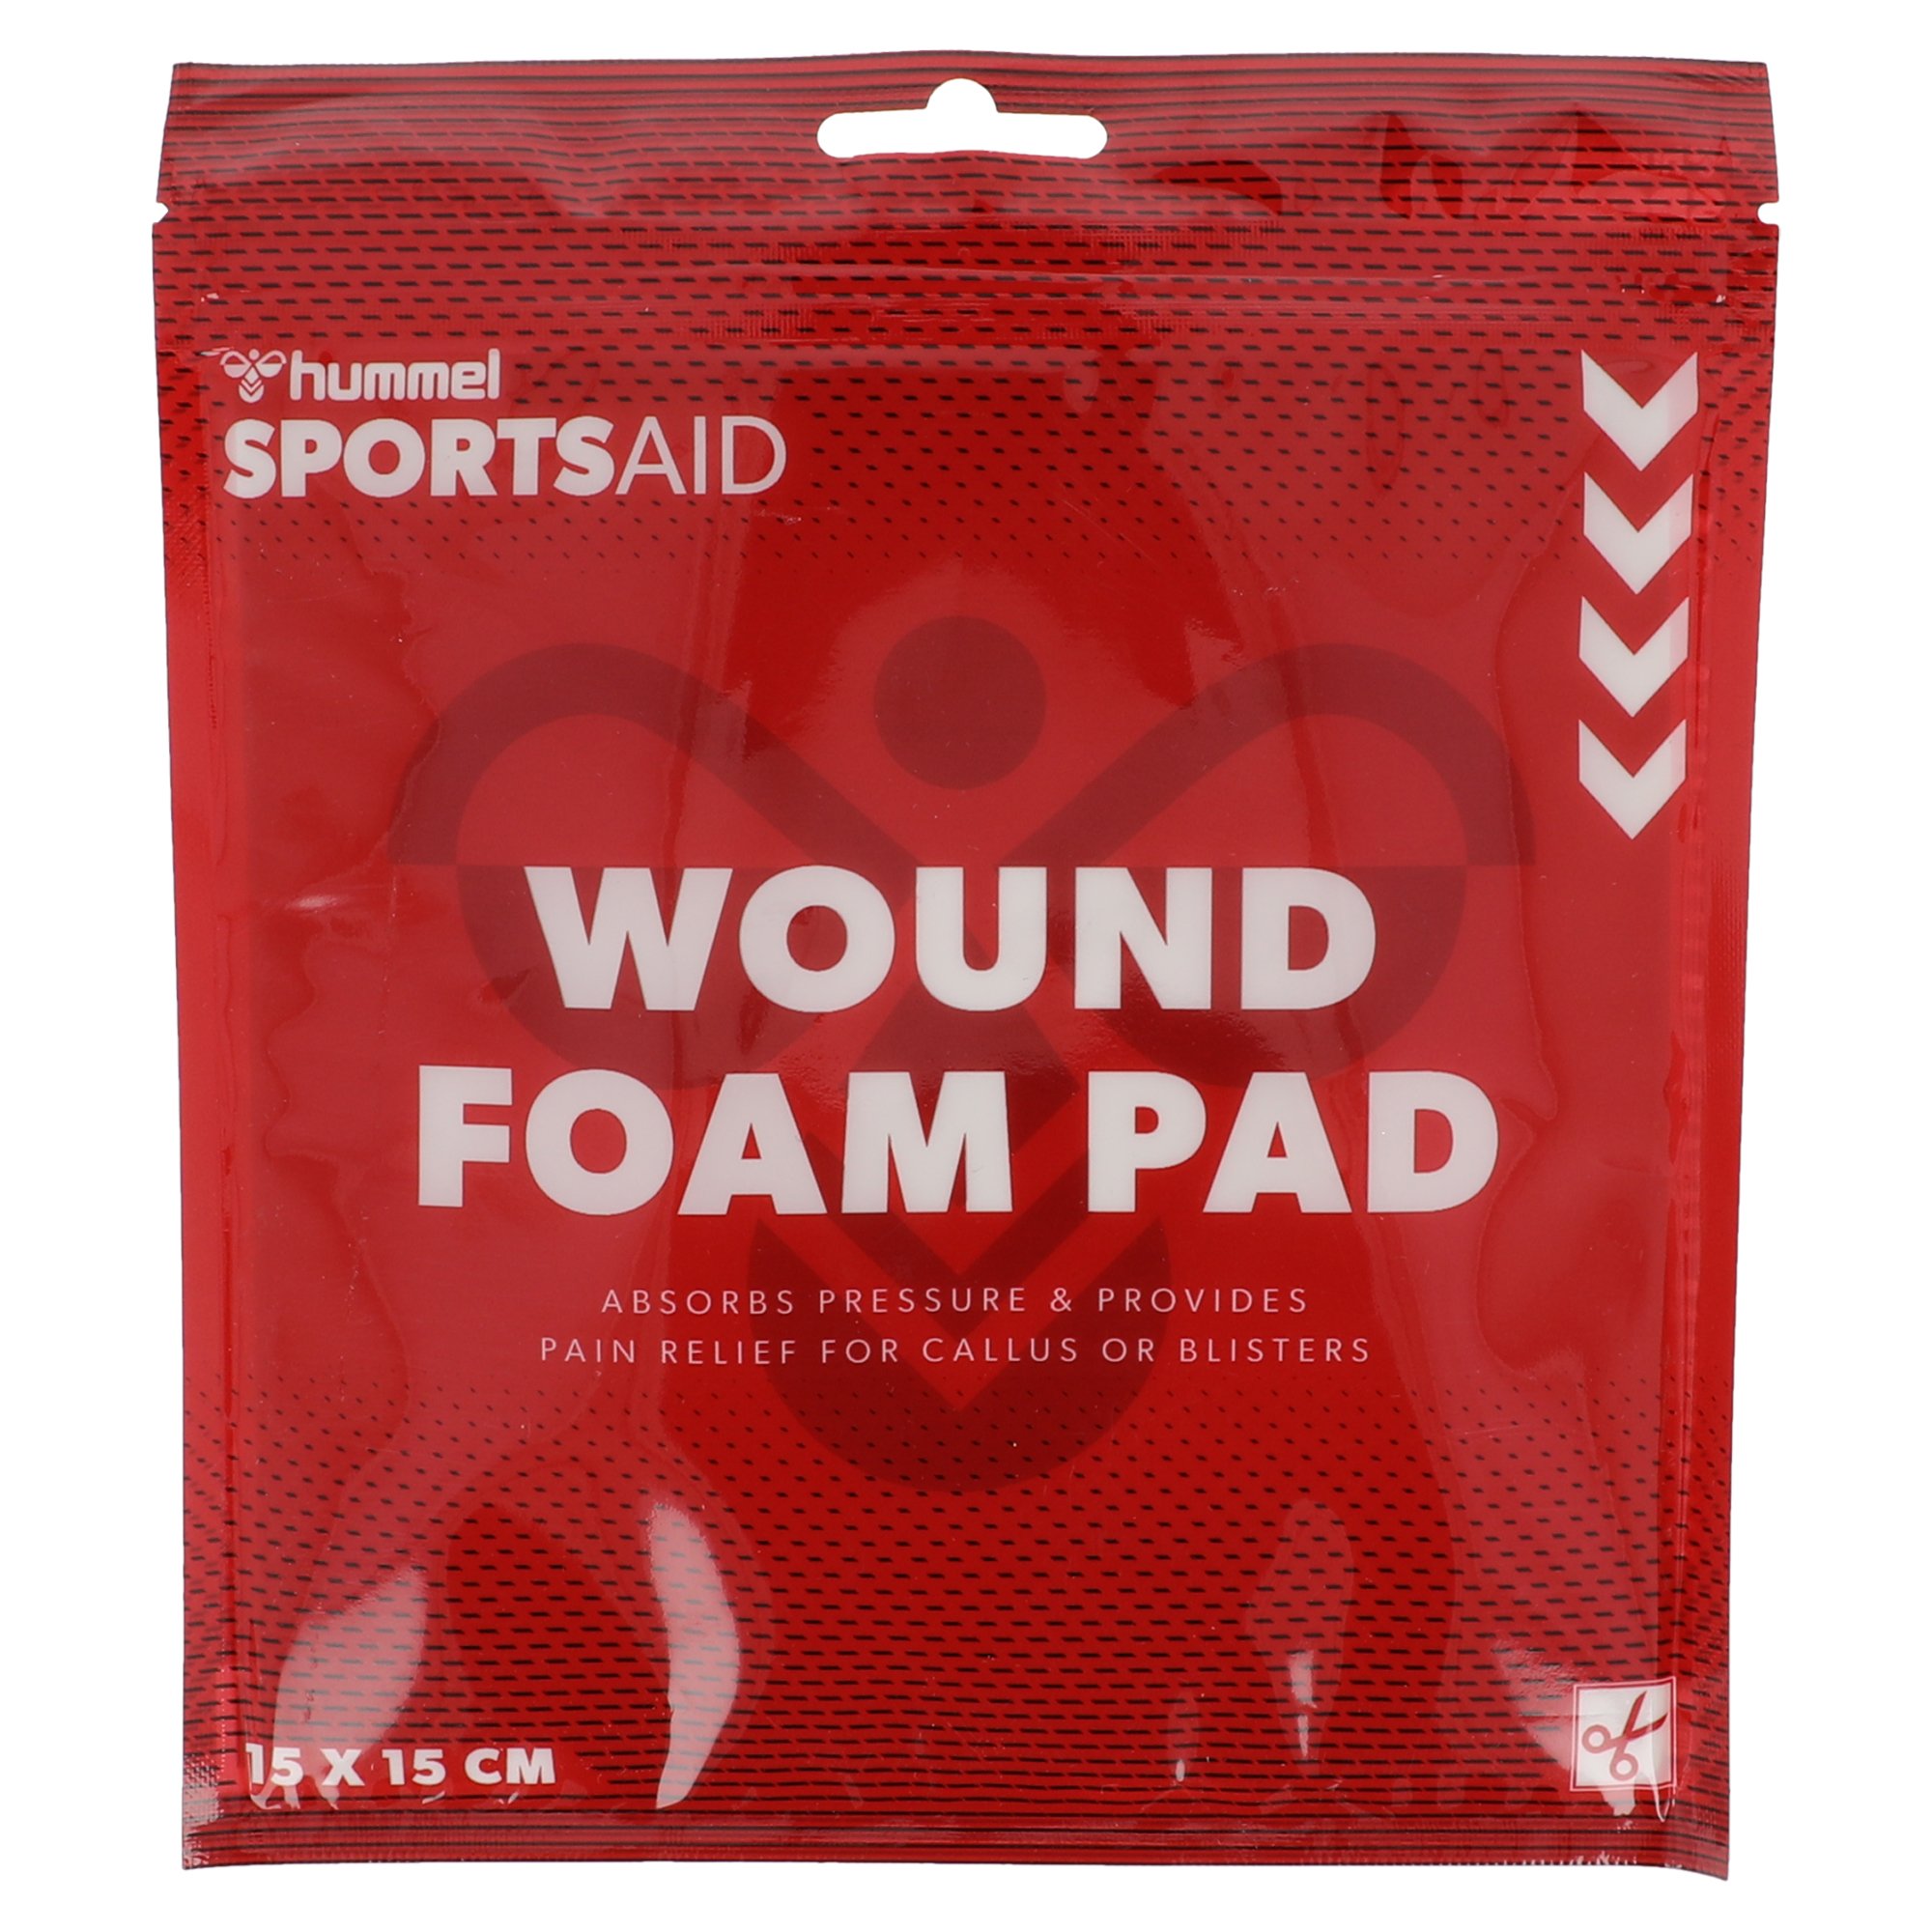 Sportsaid Wound Foam Pad